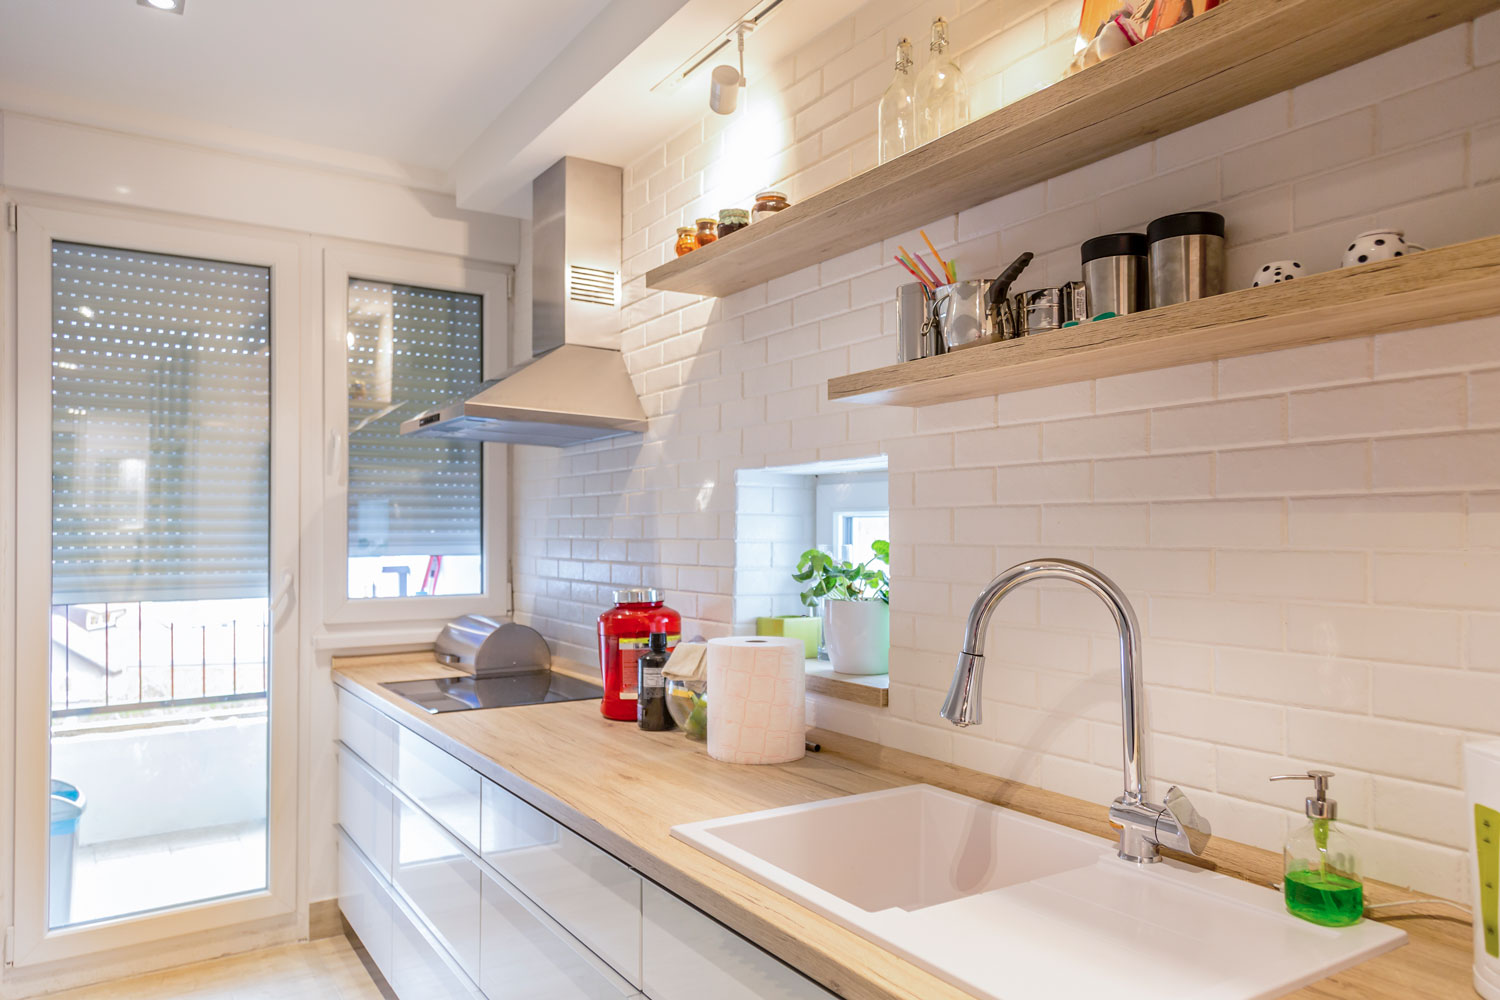 Minimalist designed kitchen with white brick backsplash and wooden countertop